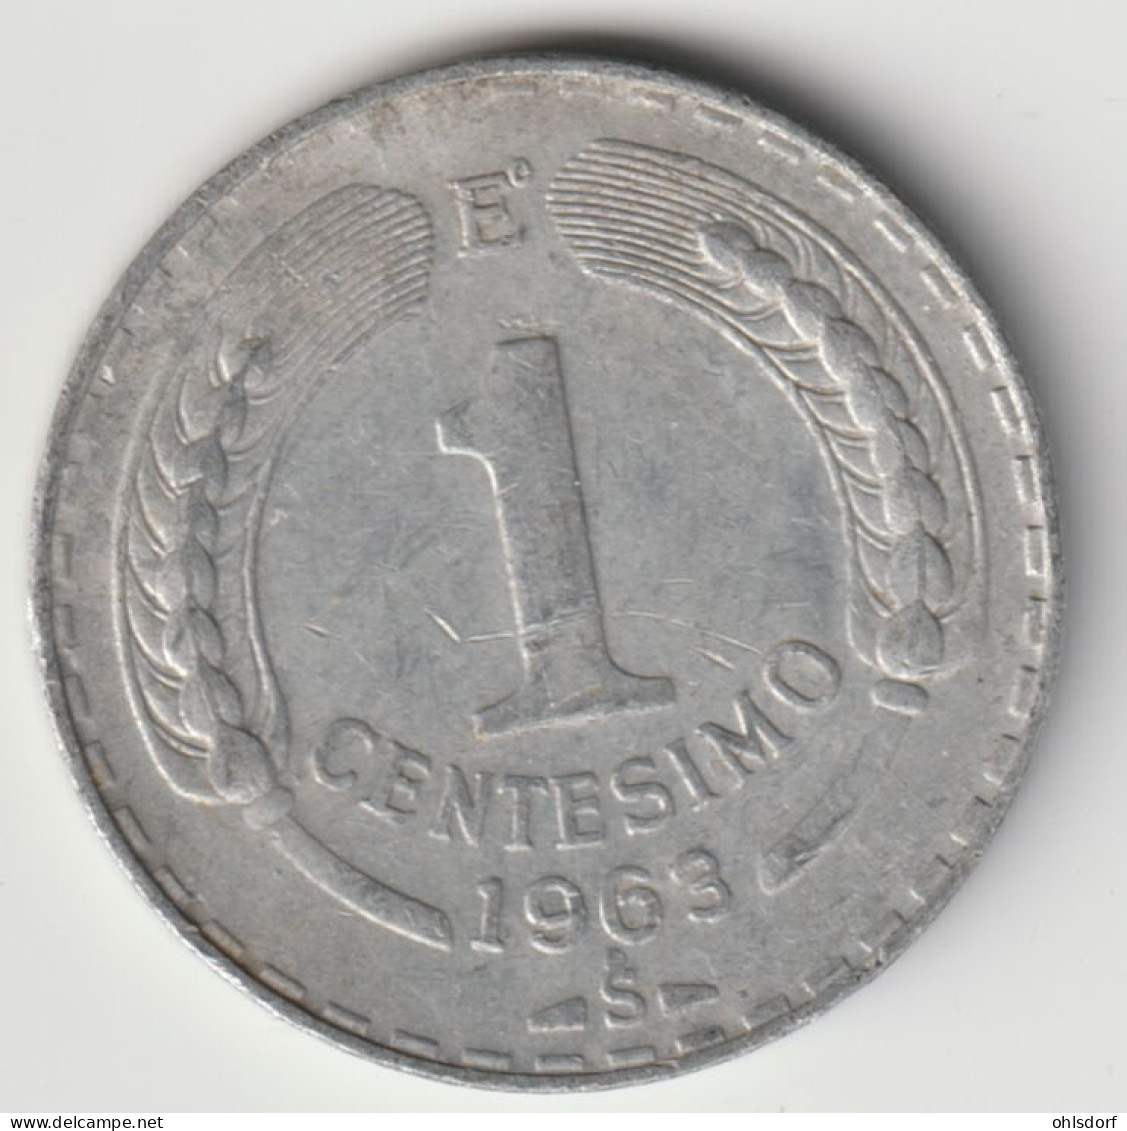 CHILE 1963: 1 Centesimo, KM 189 - Chile